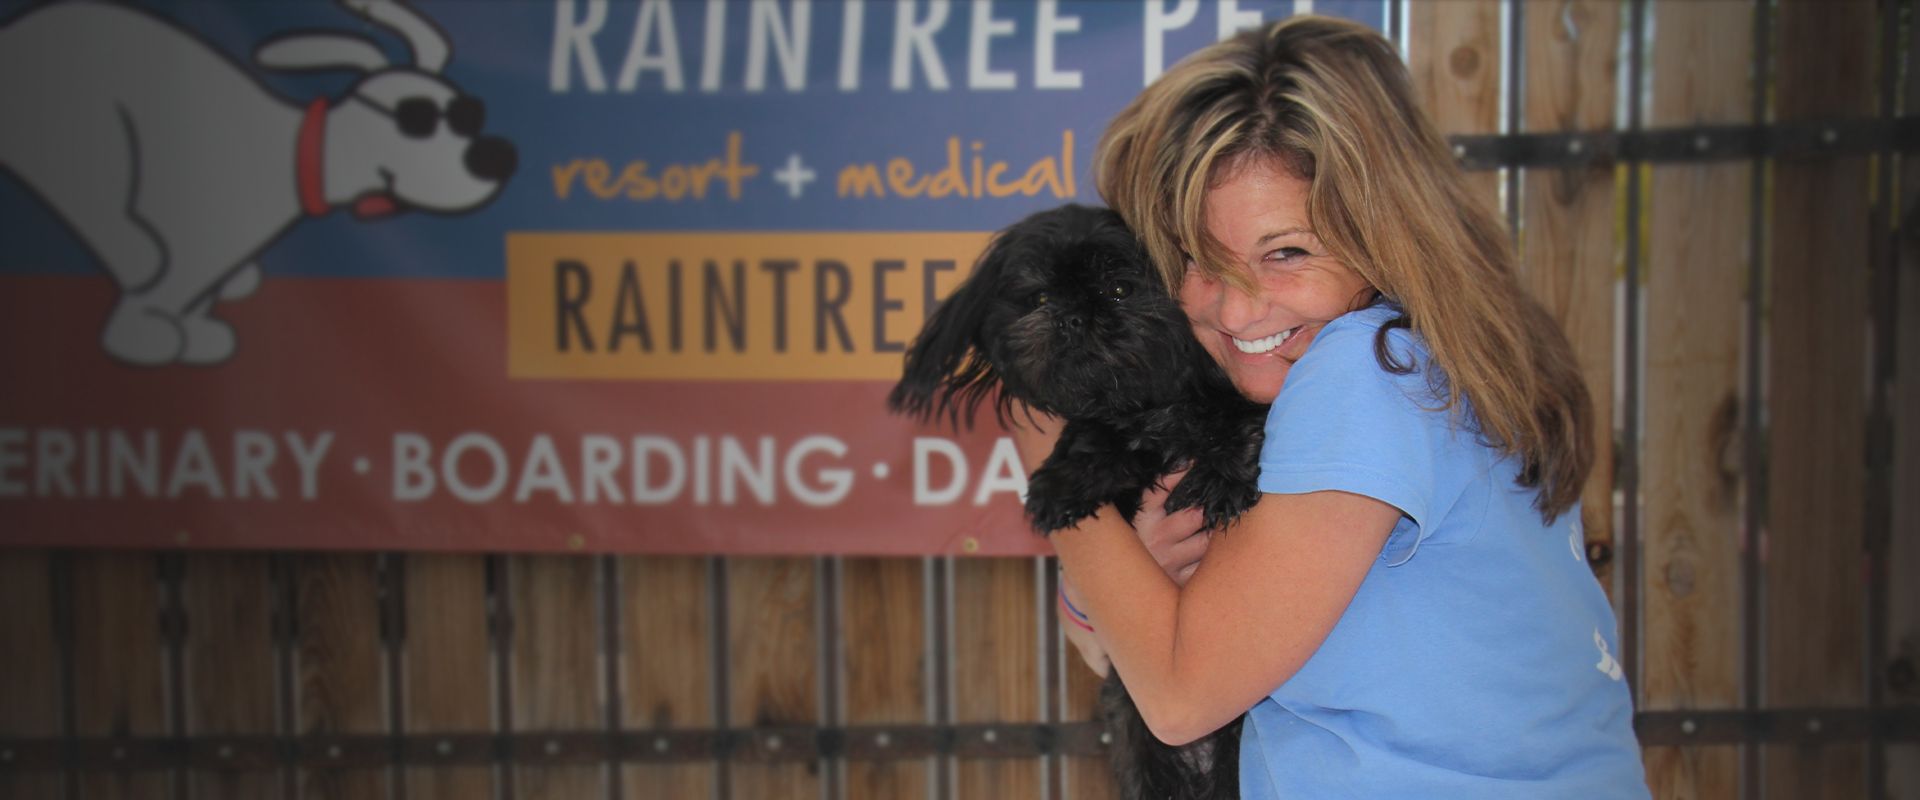 raintree pet employee hugging black furry dog